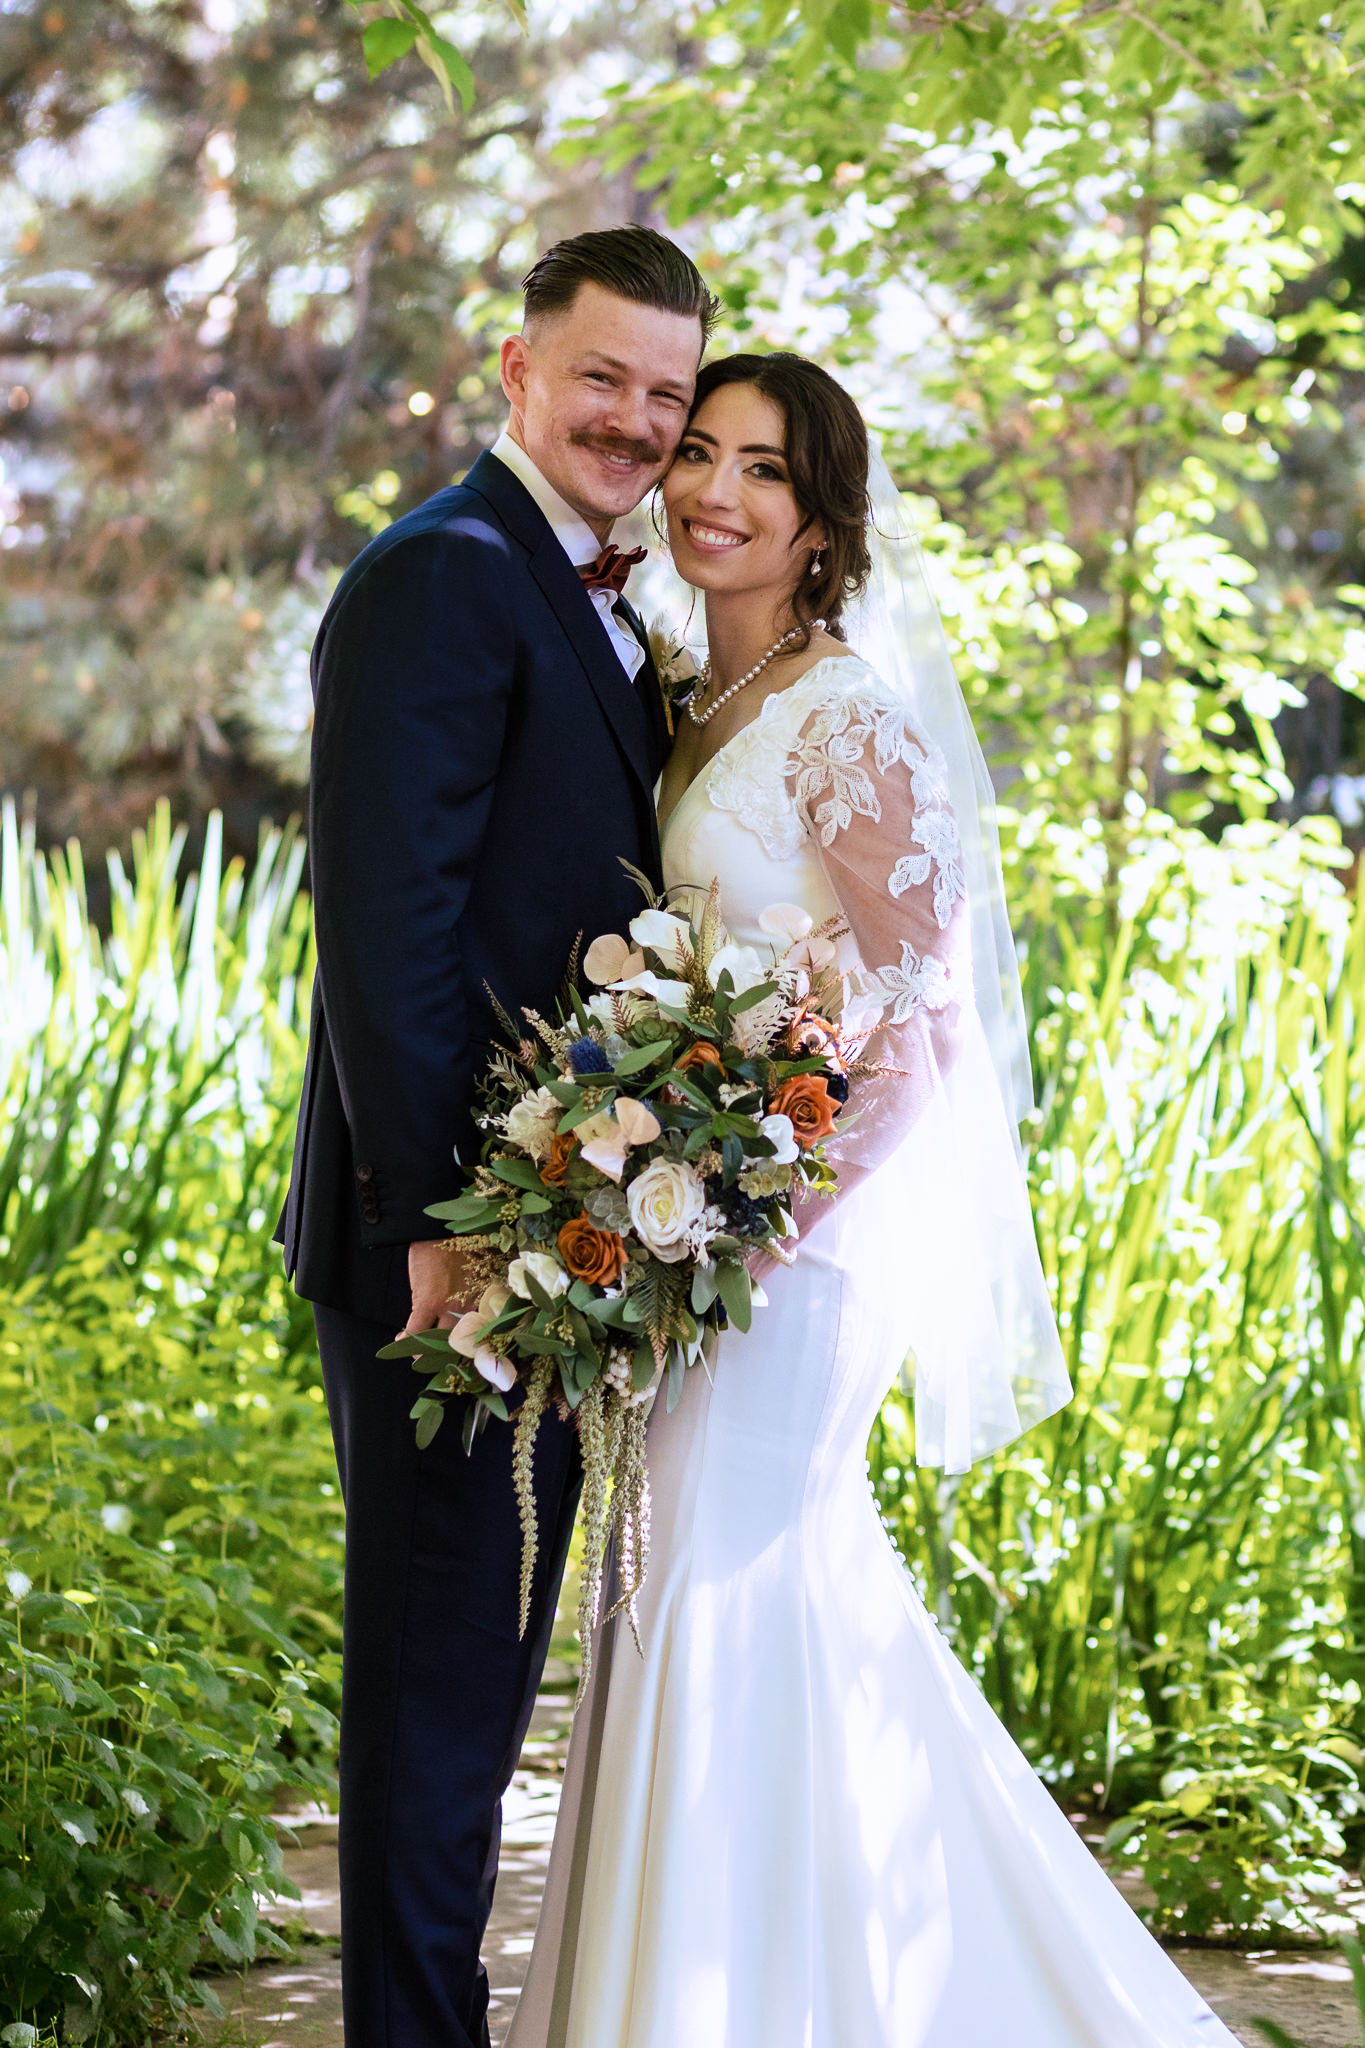 Photo of the bride & groom in the garden for Haley & Gytenis' Summer Wedding at The McCreery House by Colorado Wedding Photographer, Jennifer Garza.